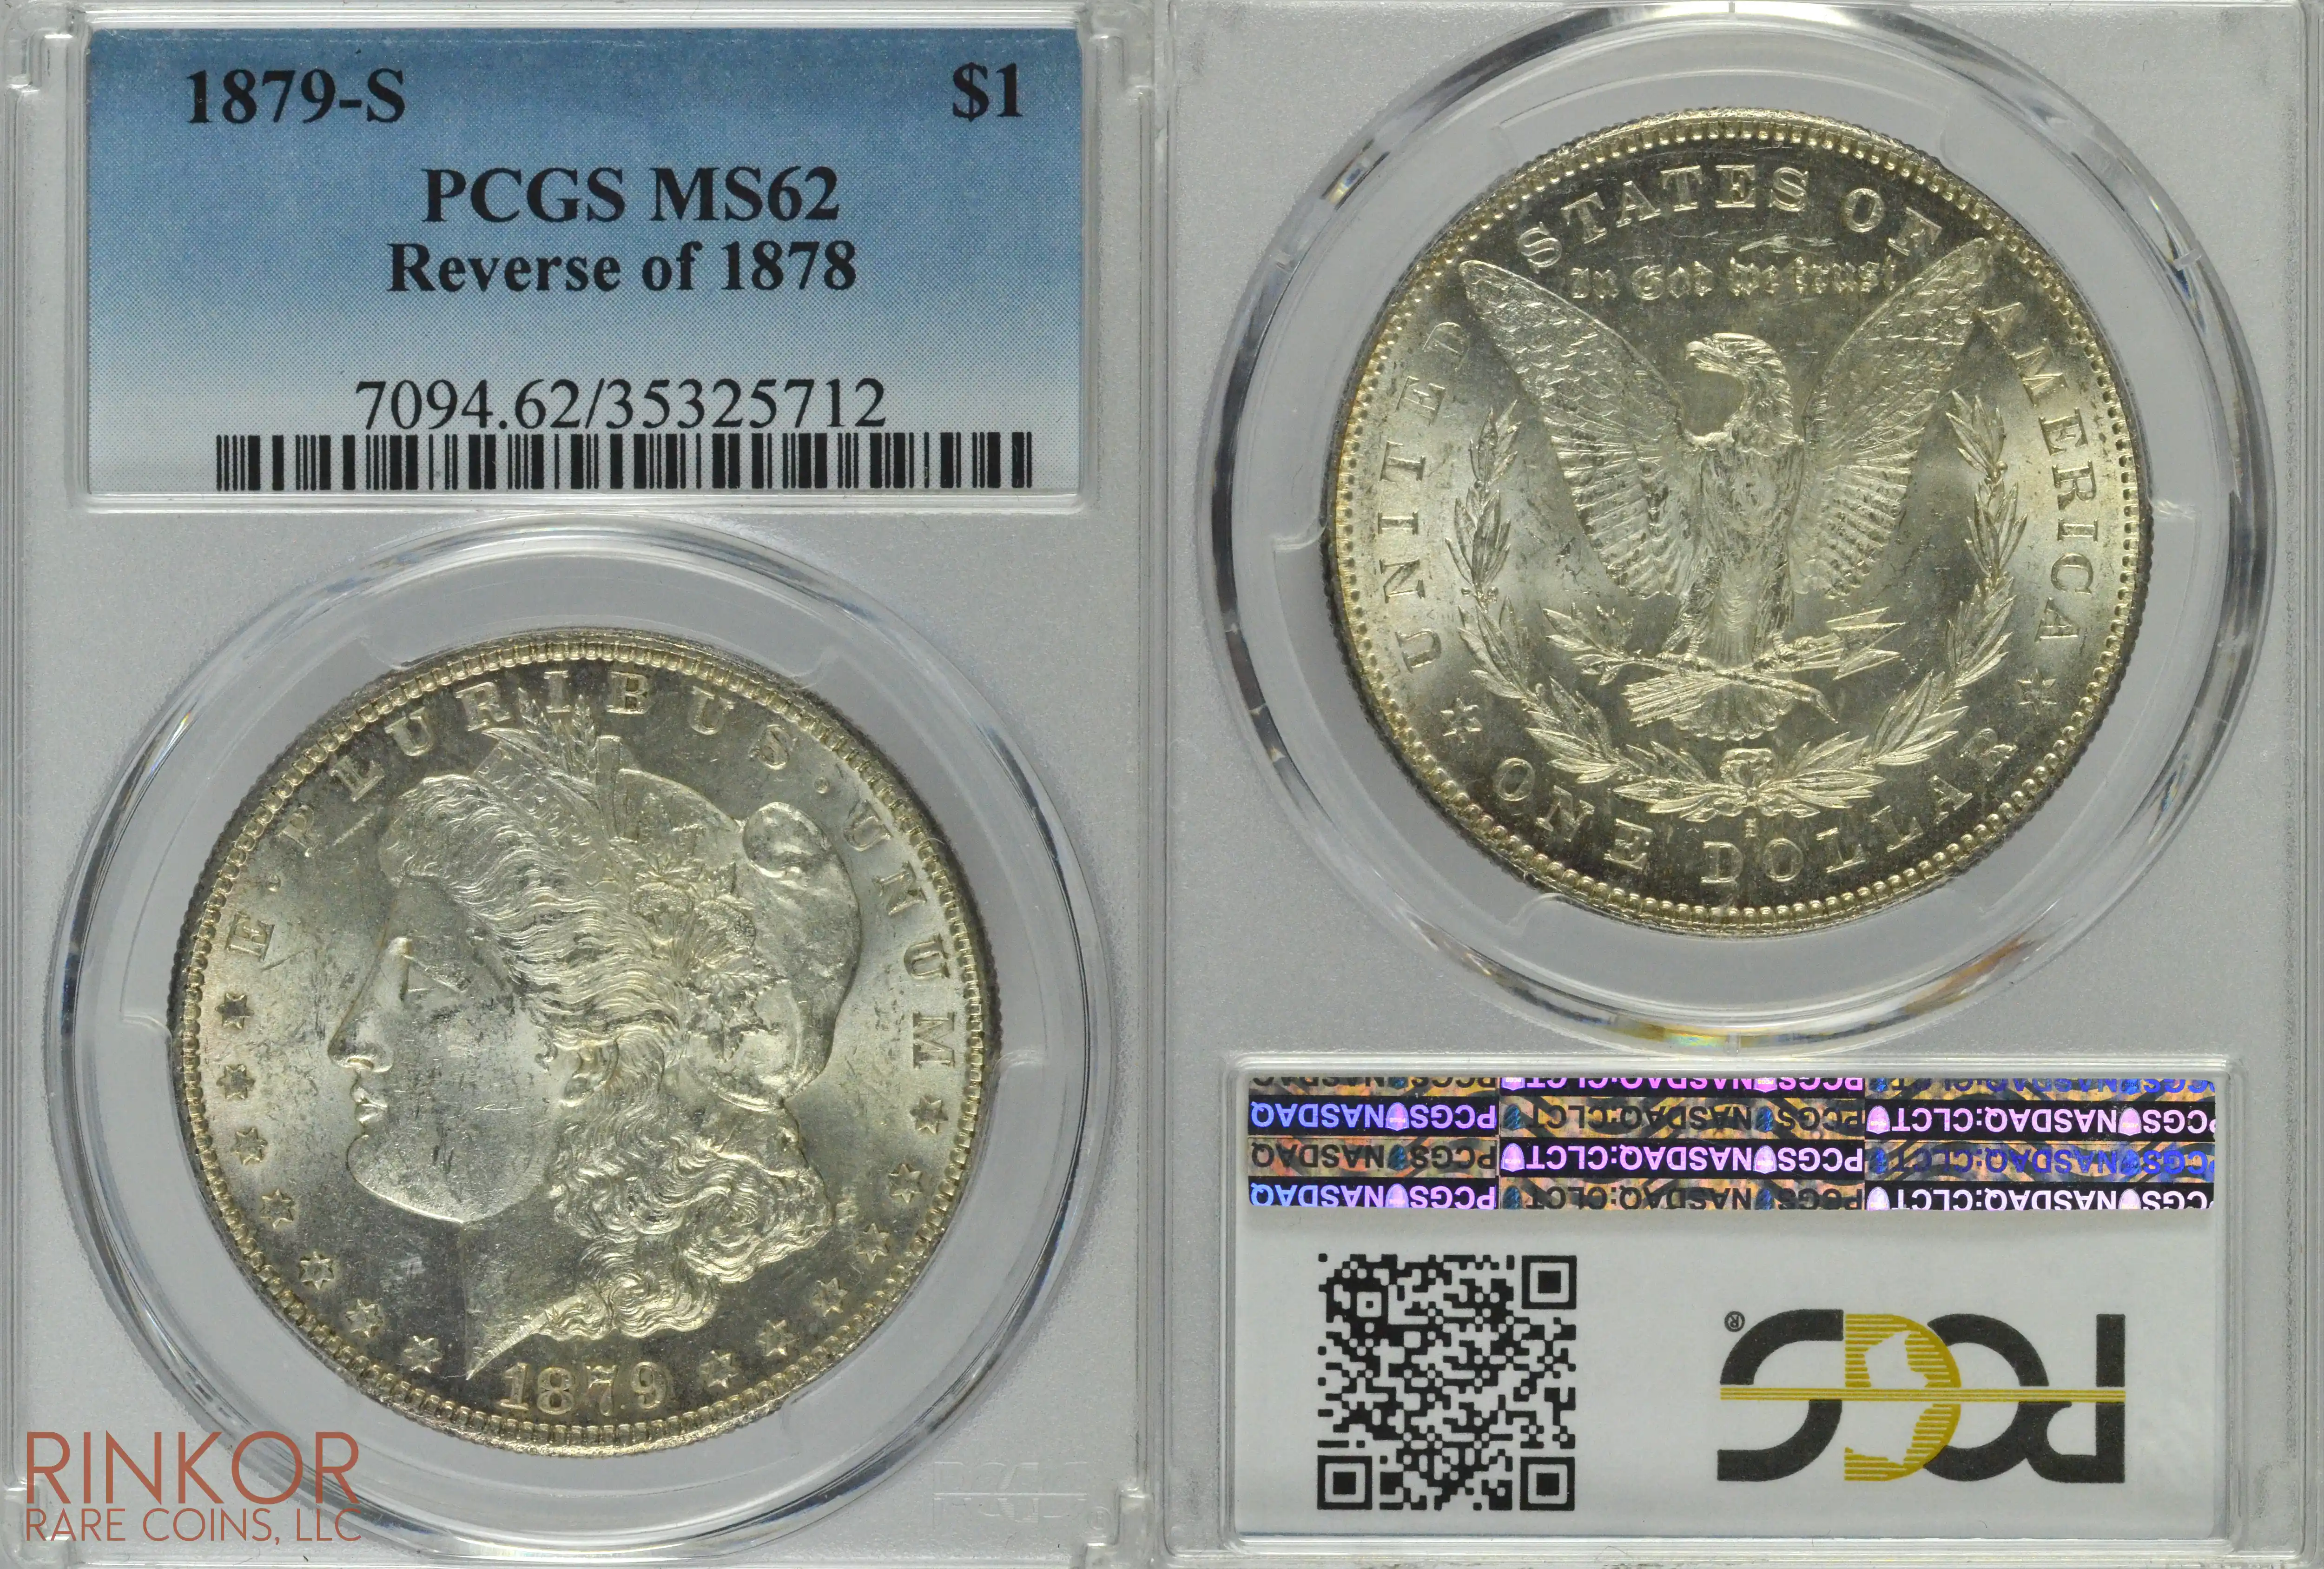 1879-S $1 Reverse of 1878 PCGS MS 62